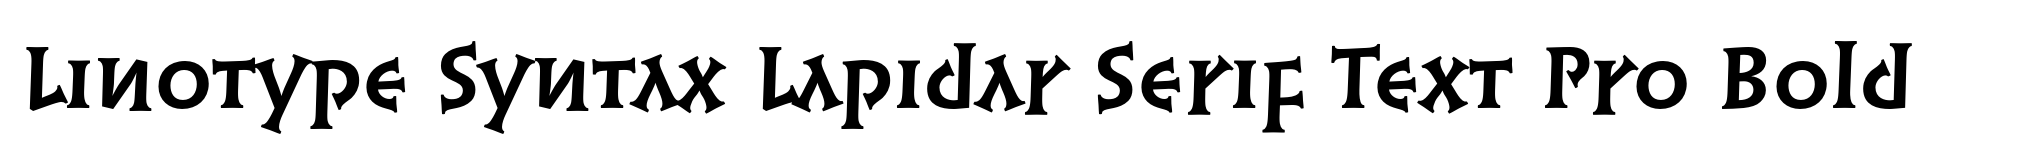 Linotype Syntax Lapidar Serif Text Pro Bold image